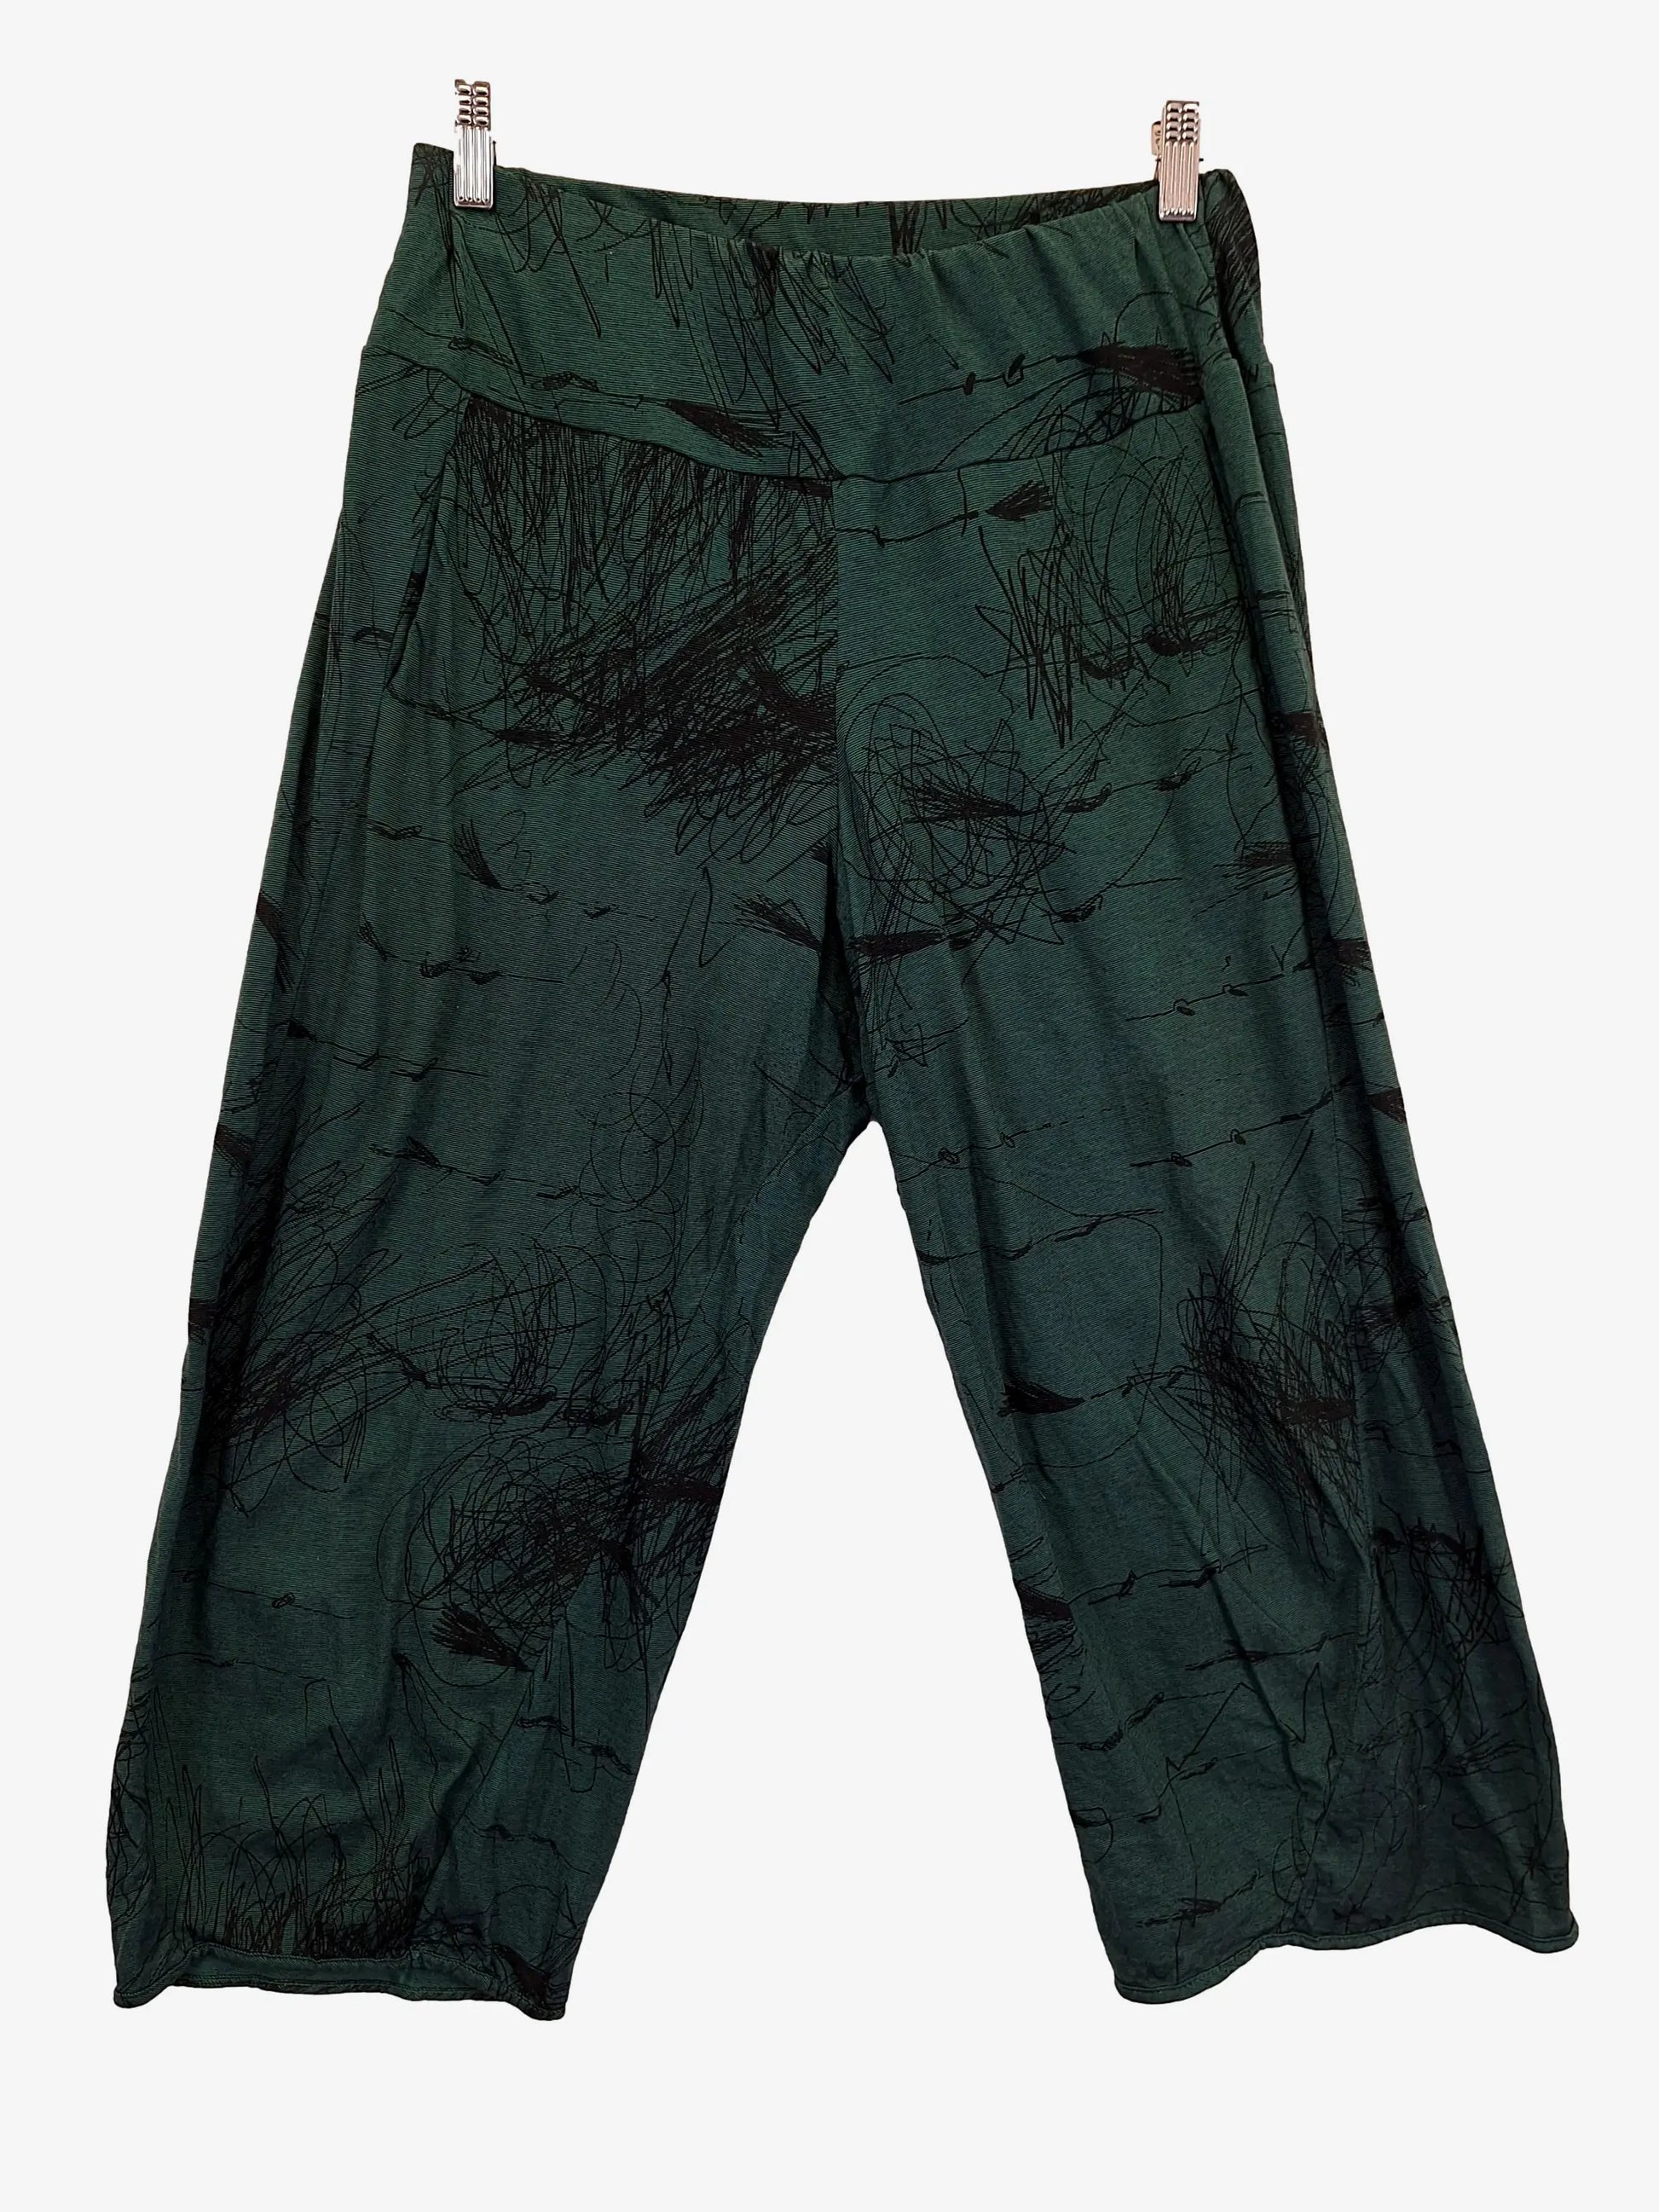 Valia Comfy Capri Style Pants Size S – SwapUp